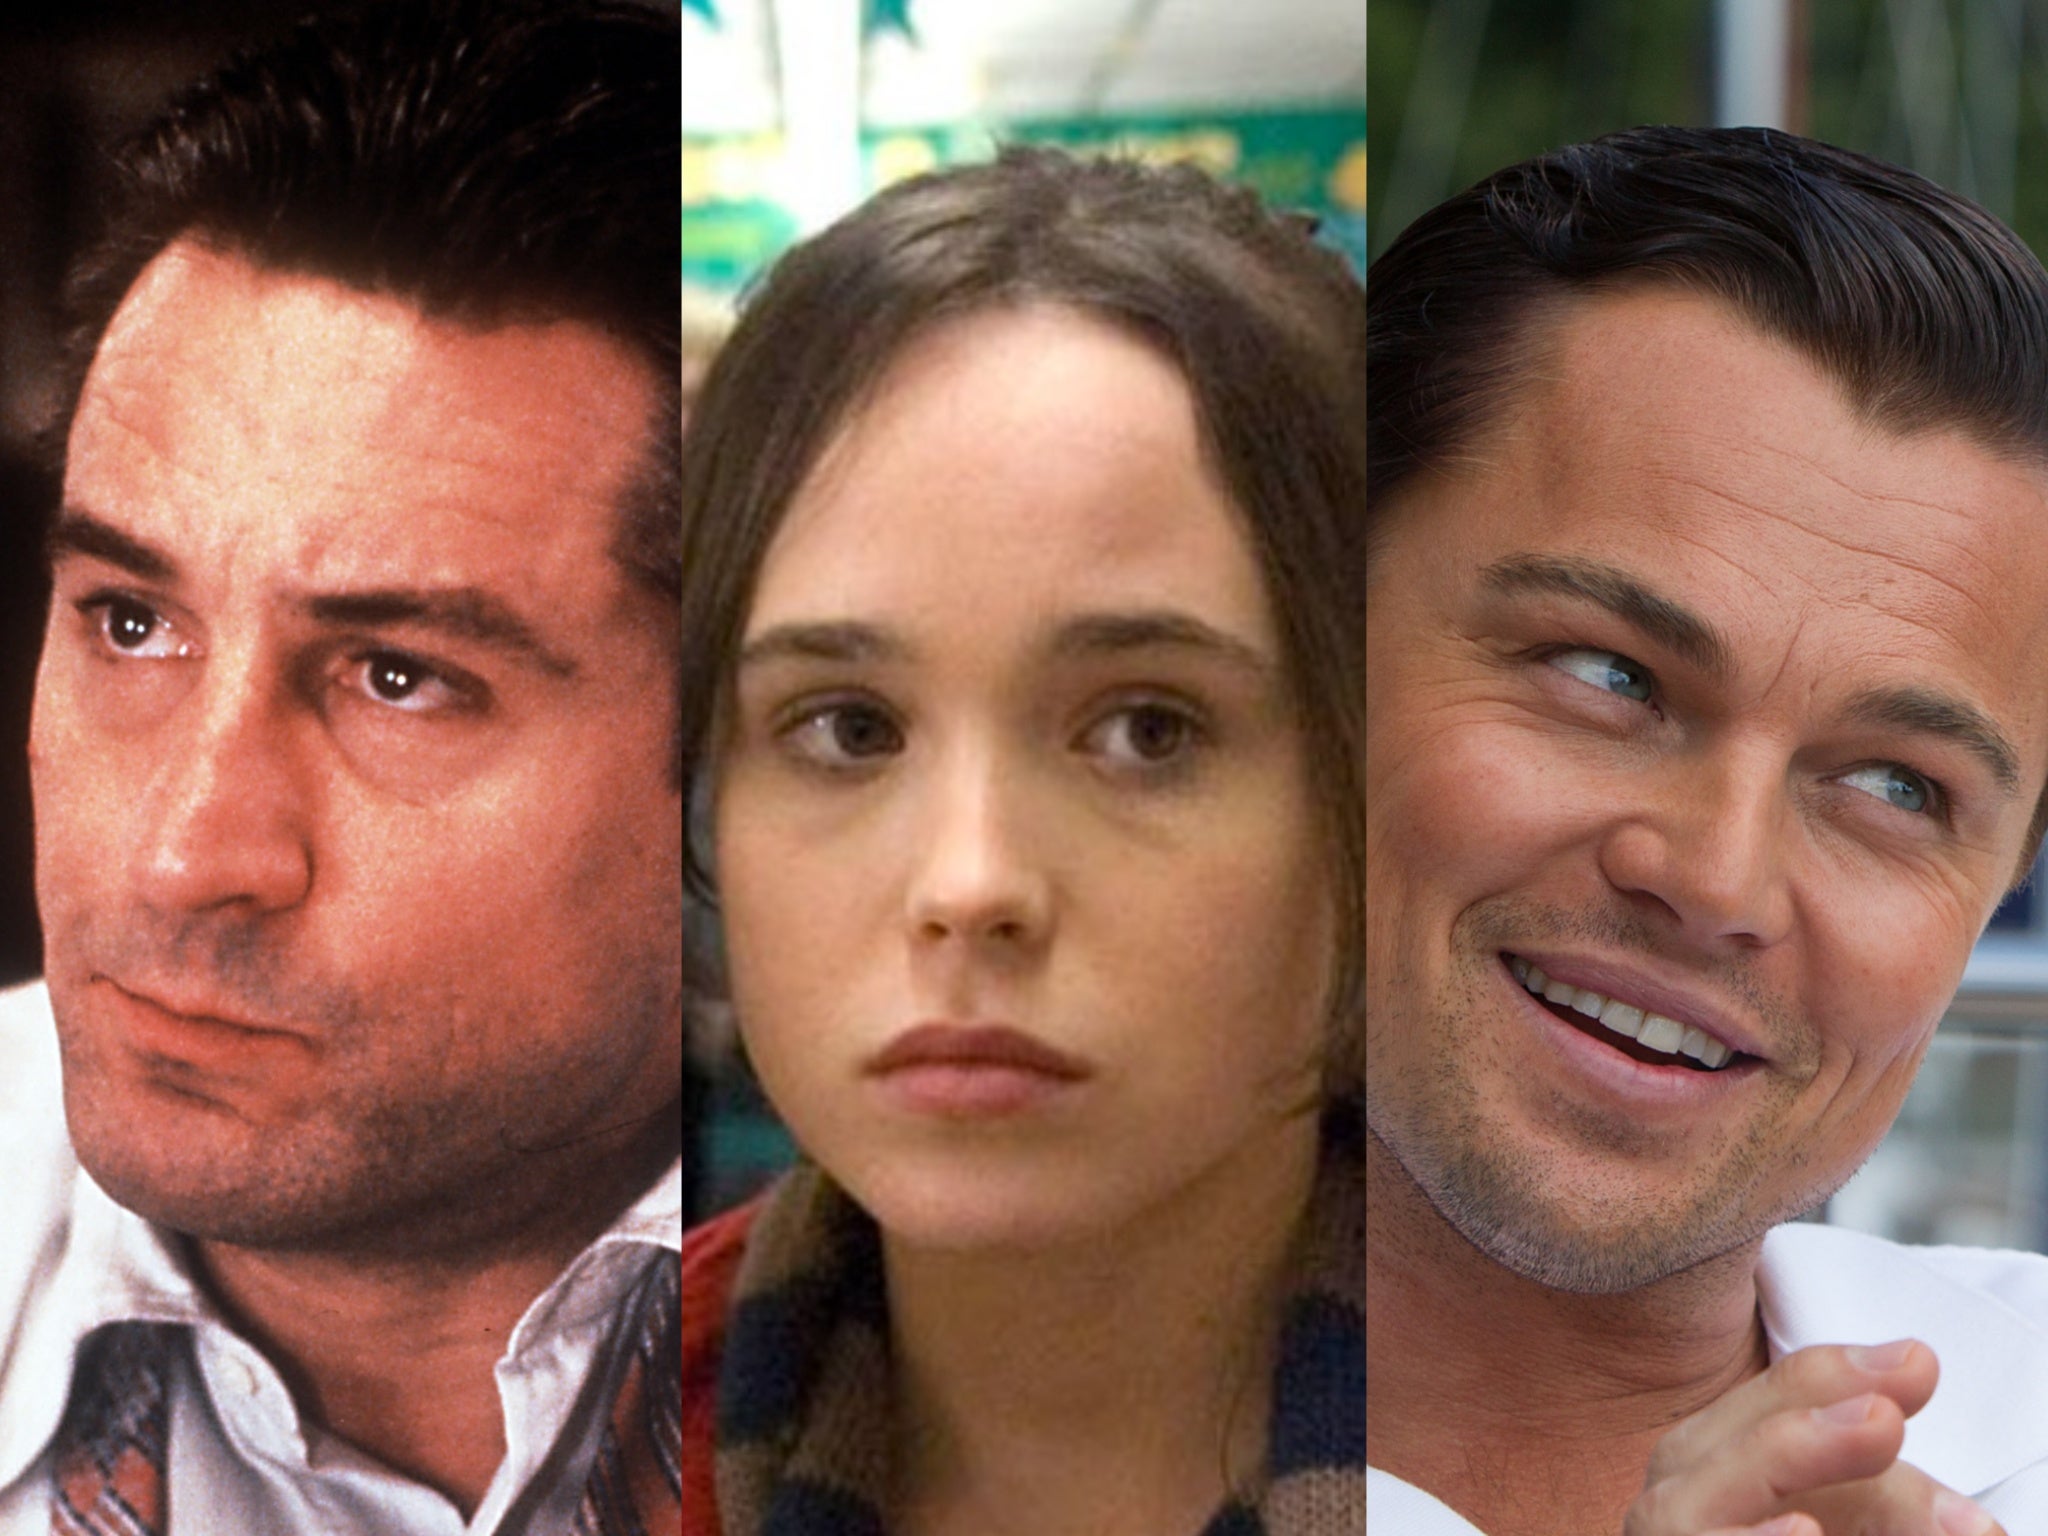 Robert De Niro in ‘Goodfellas’, Elliot Page in ‘Juno’, and Leonardo DiCaprio in ‘Wolf of Wall Street'